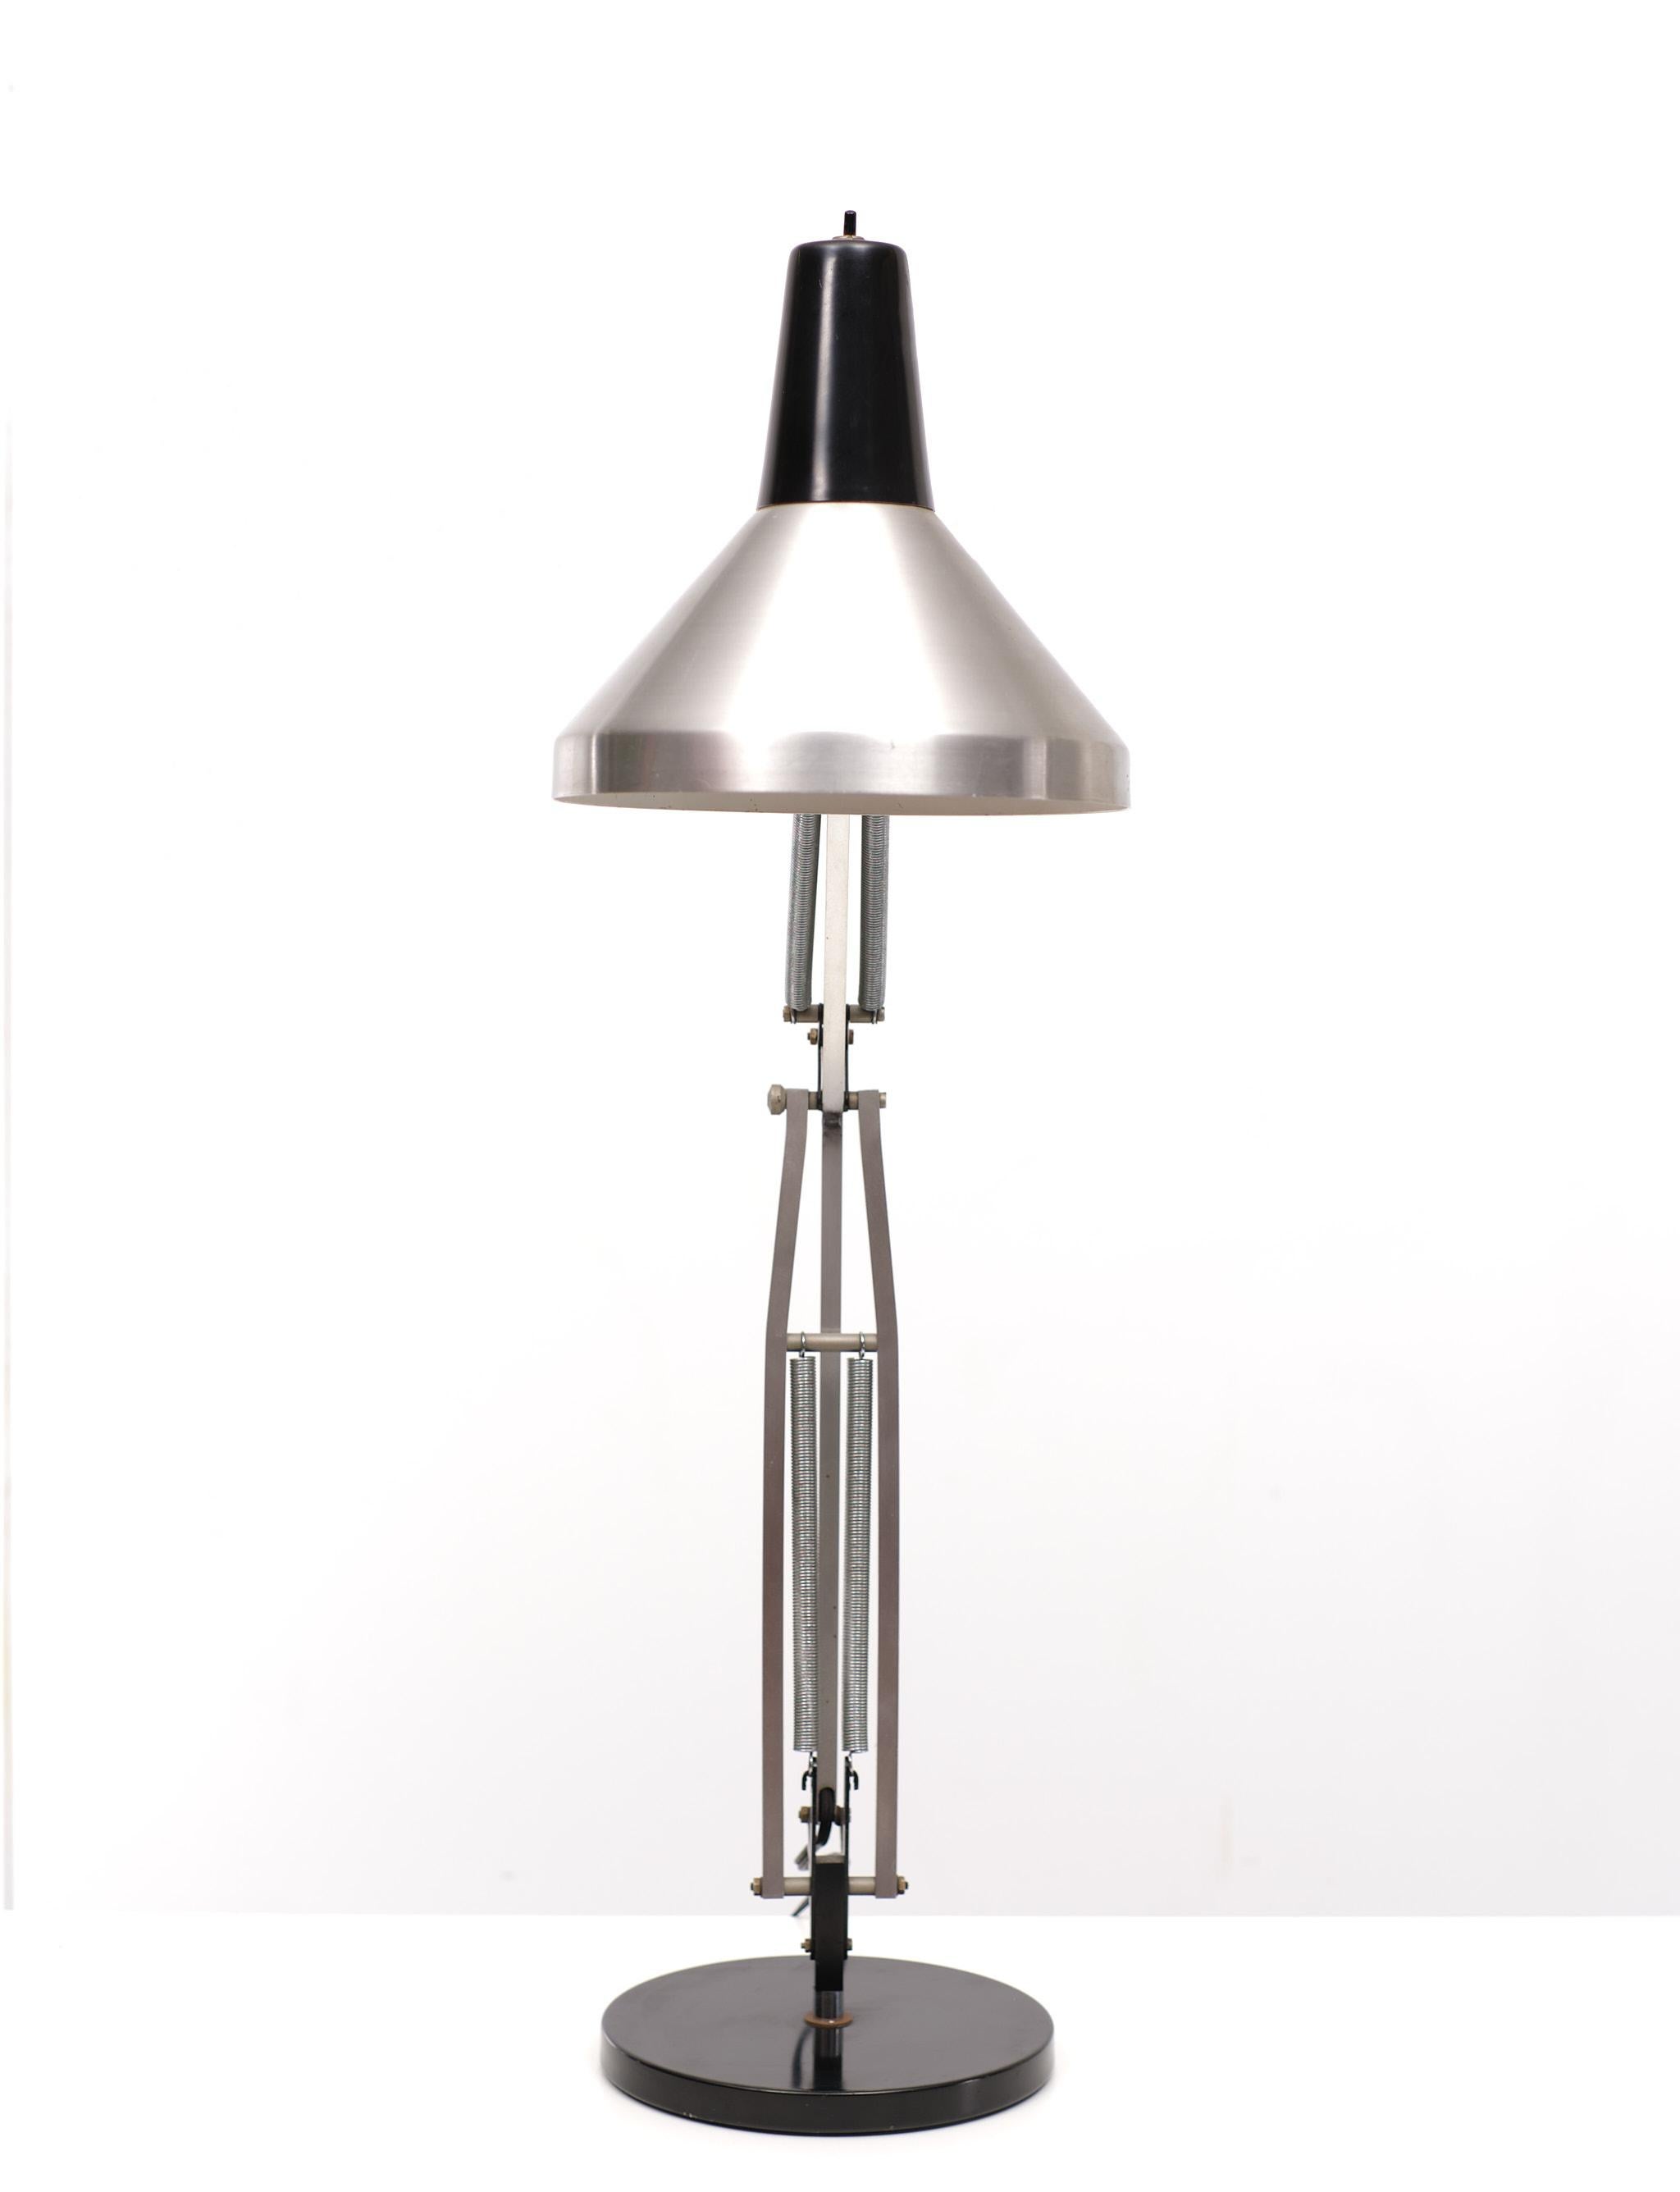 Metal Hala Zeist Architect Desk Lamp, Dutch, 1960s For Sale